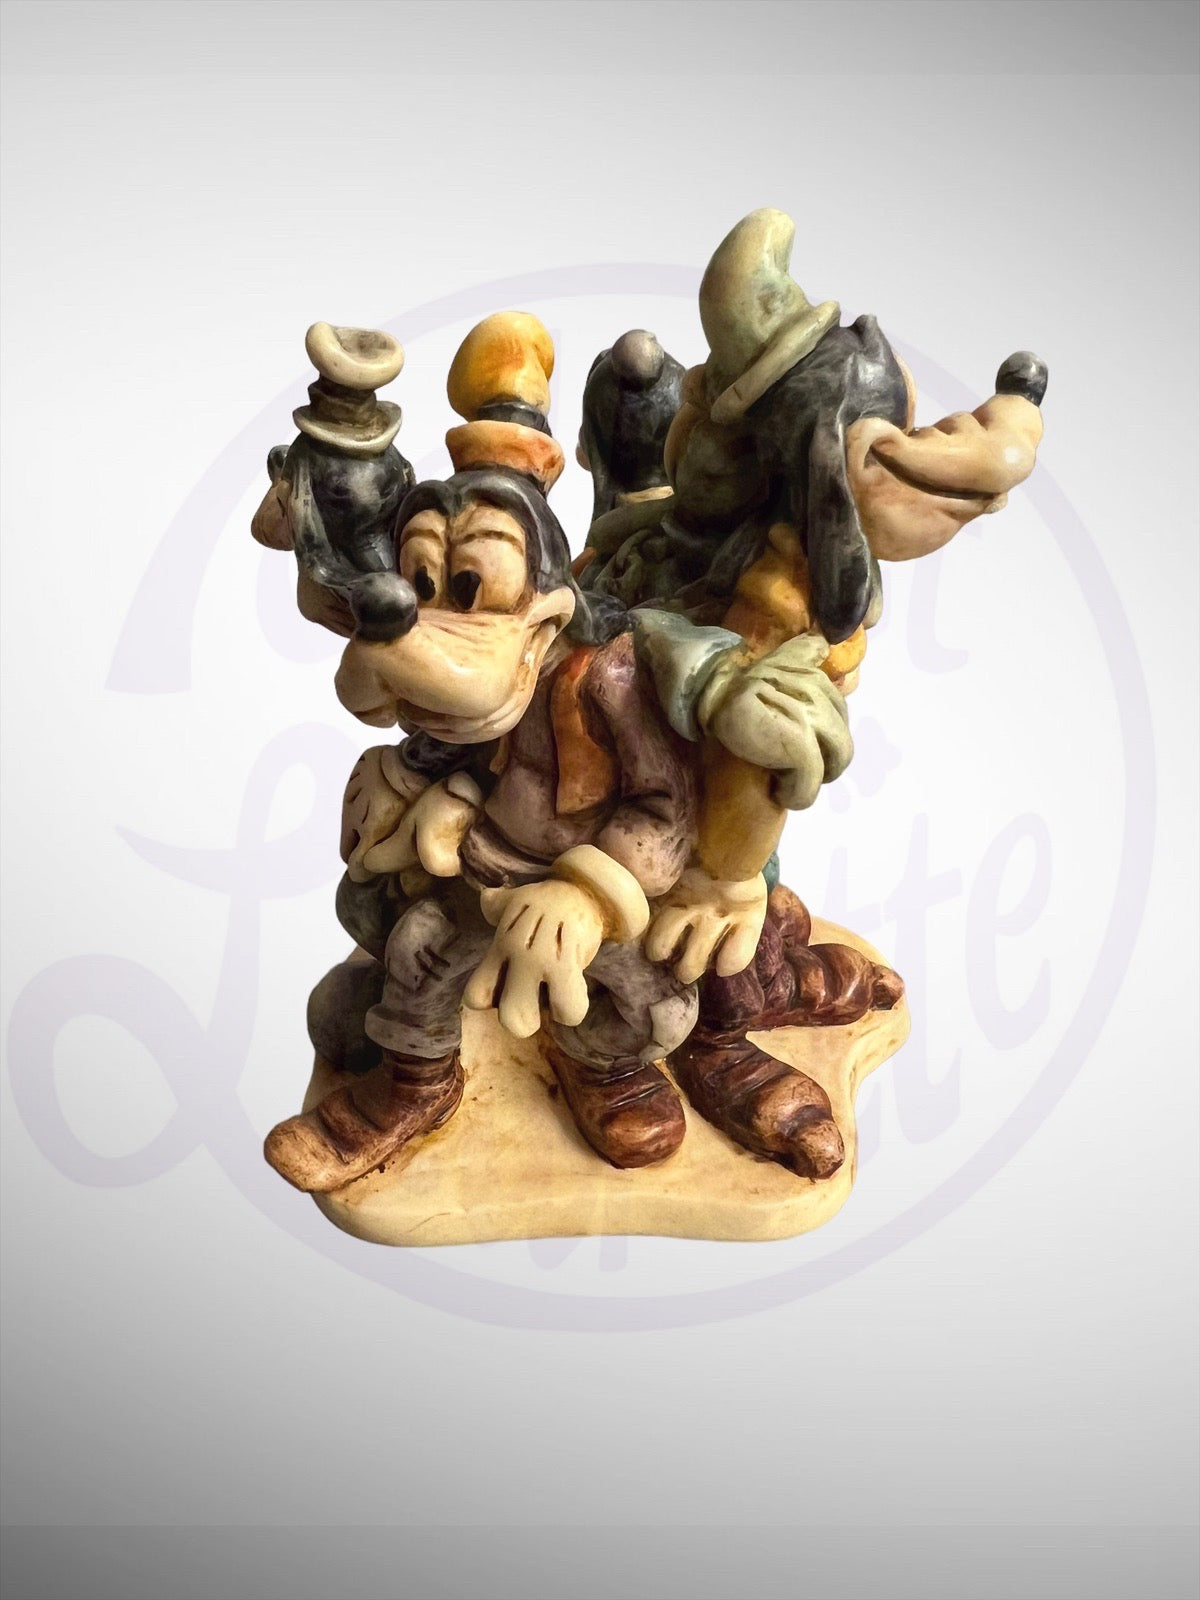 Harmony Kingdom Box - Disney Goofy Through the Years Figurine No Box